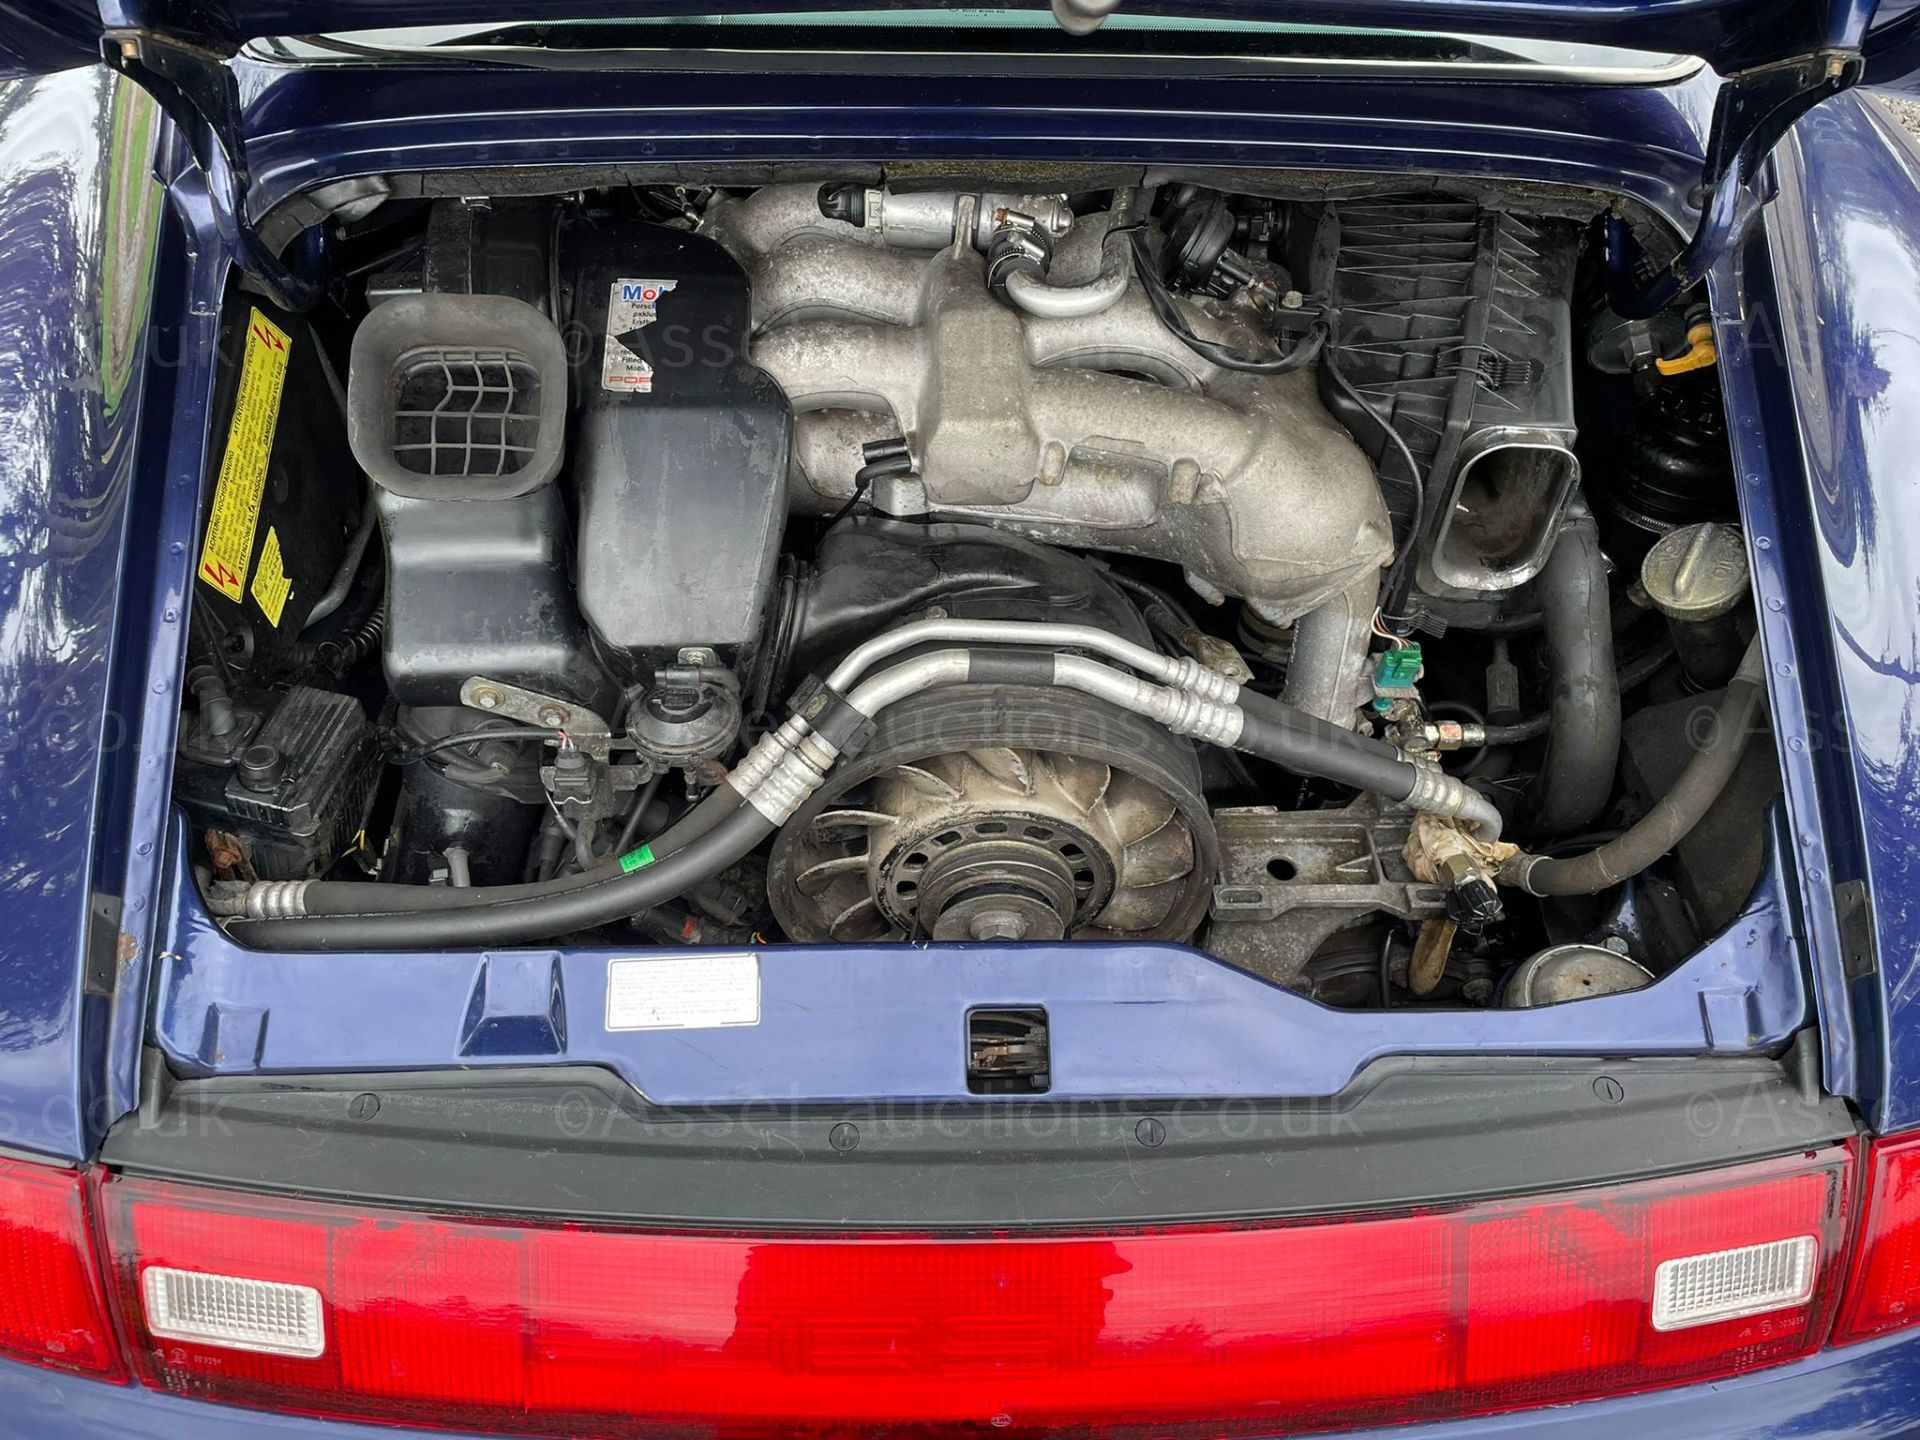 1996 PORSCHE 911 CARRERA 4 S BLUE SALOON, 141K MILES, 3600cc PETROL ENGINE *PLUS VAT* - Image 7 of 12